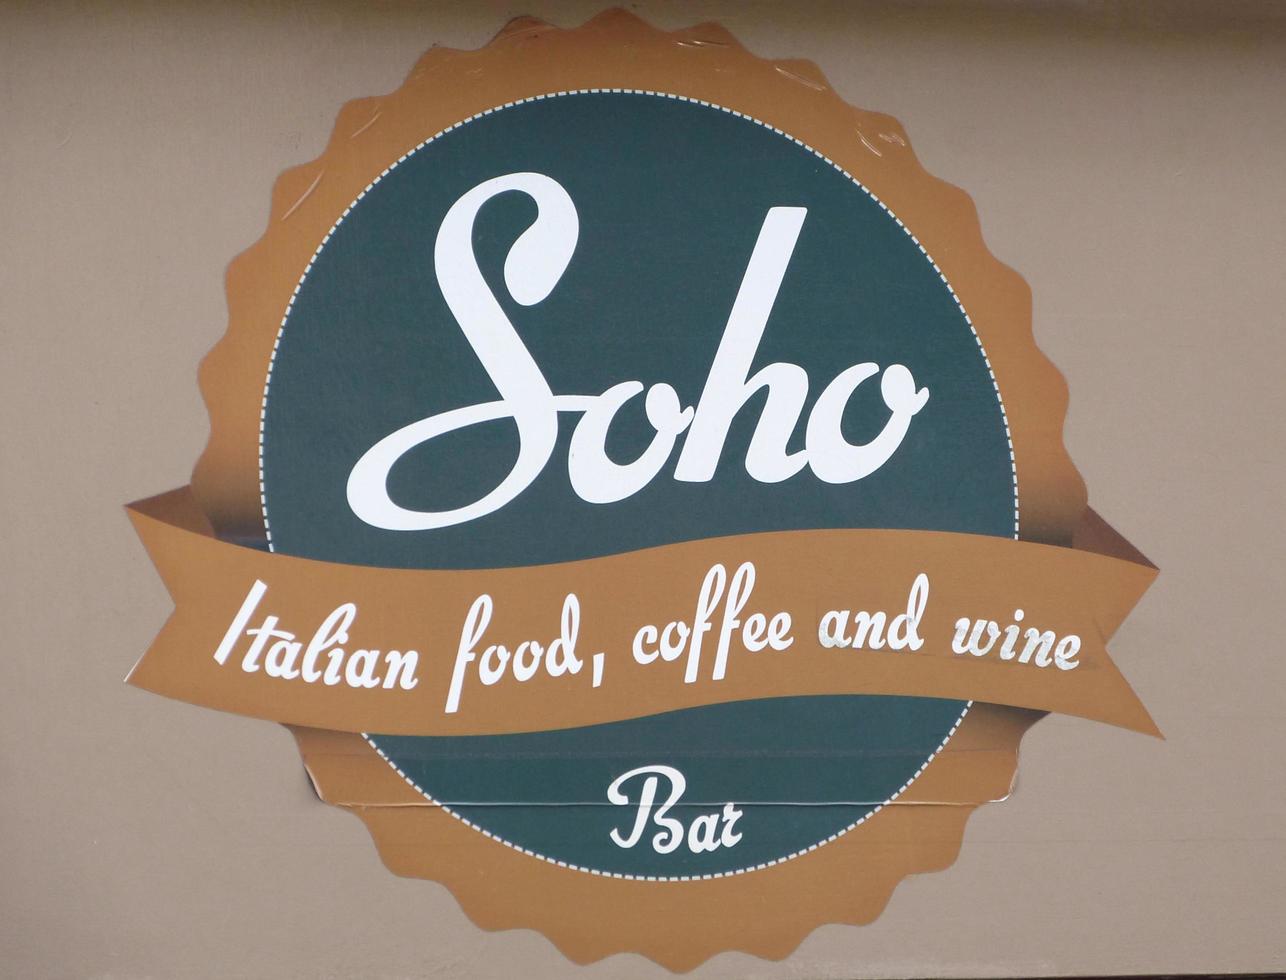 Londres, Angleterre, Royaume-Uni - août 11, 2018 - soho bar, italien nourriture, café et du vin signe. soho, Londres. photo